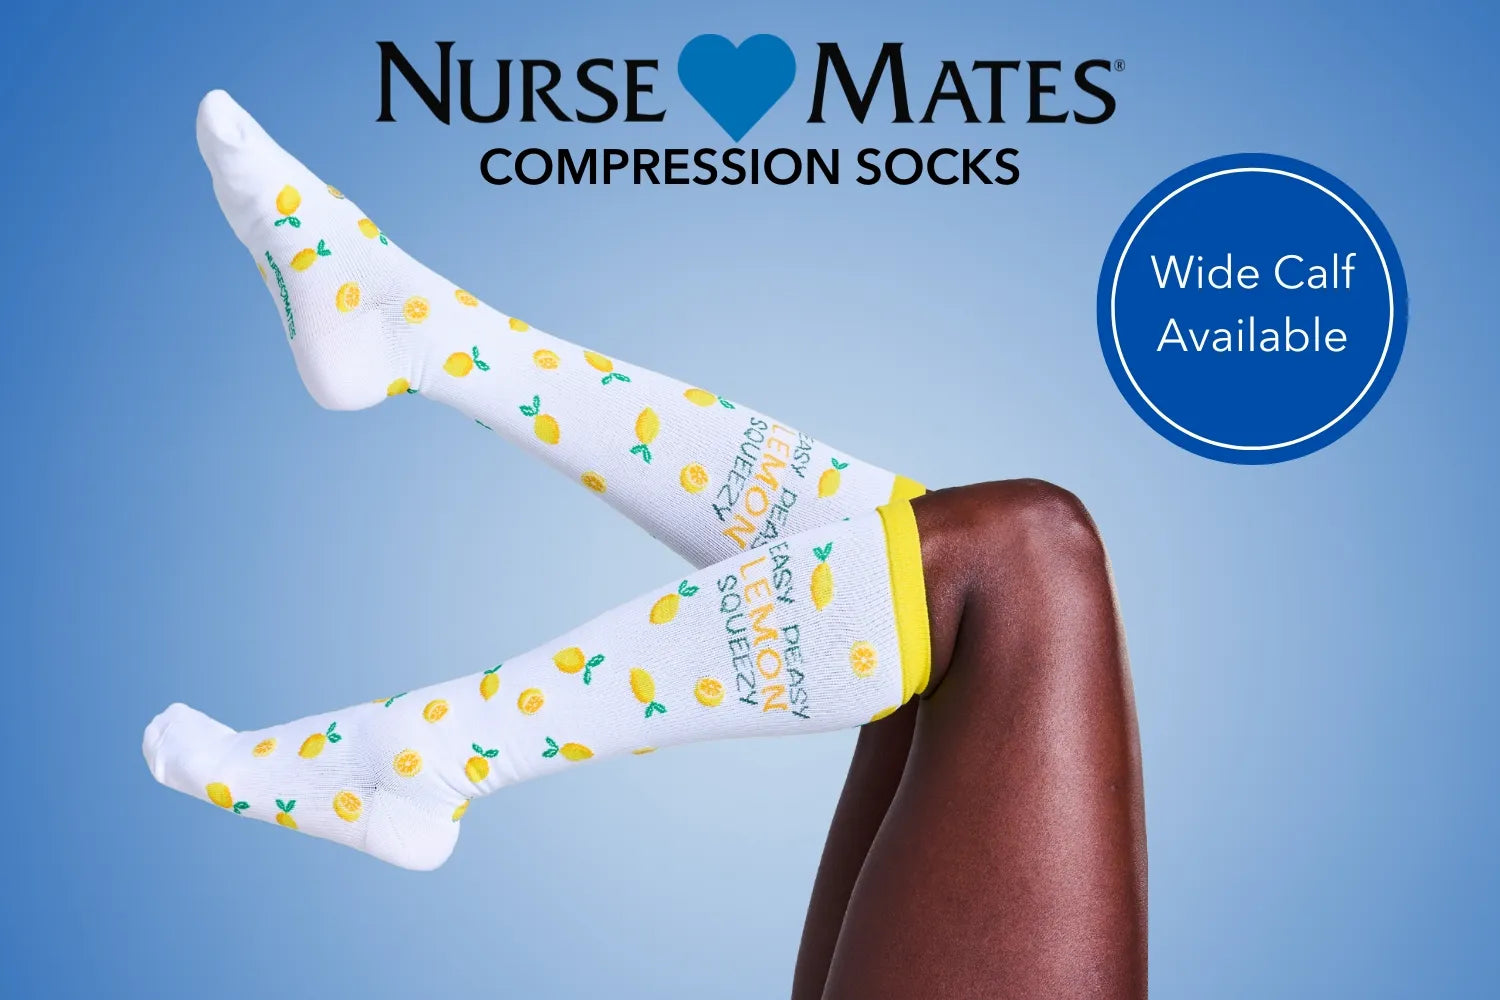 Nurse Mates compression socks collection are available in wide calf at Scrub Pro Uniforms.